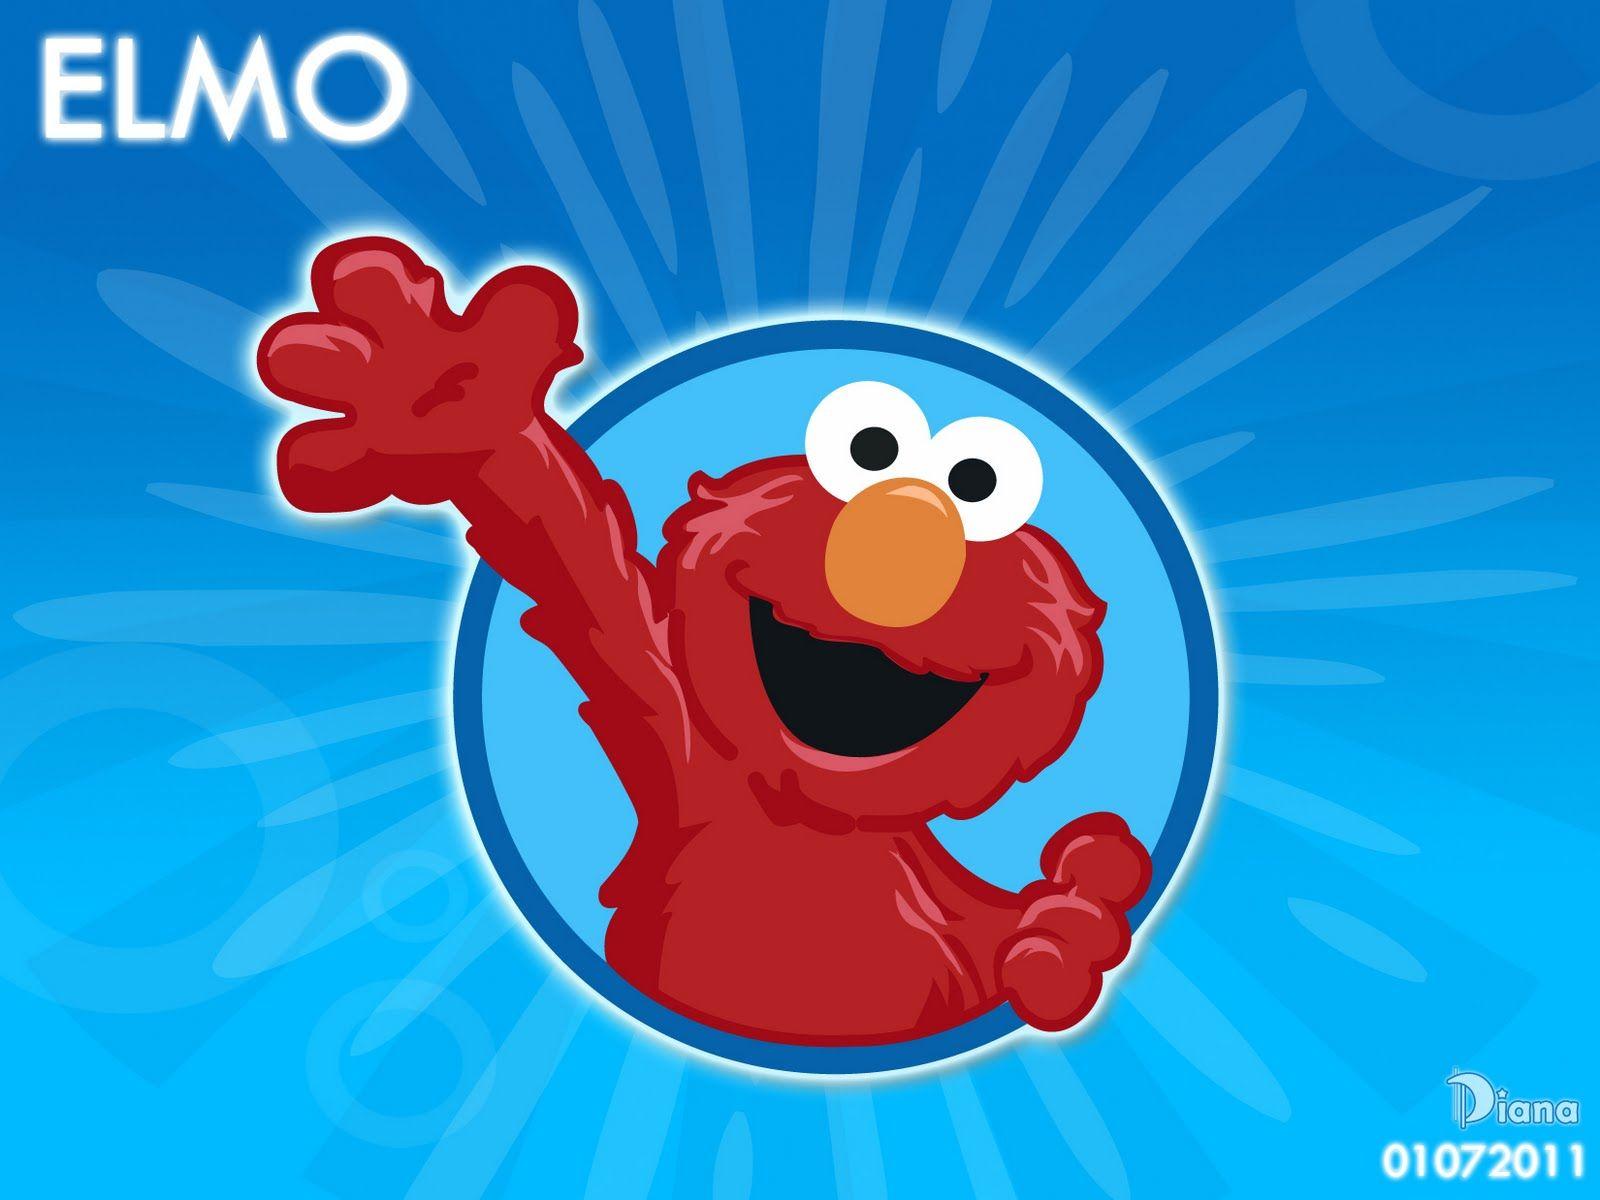 Elmo HD Wallpaper, Background Image